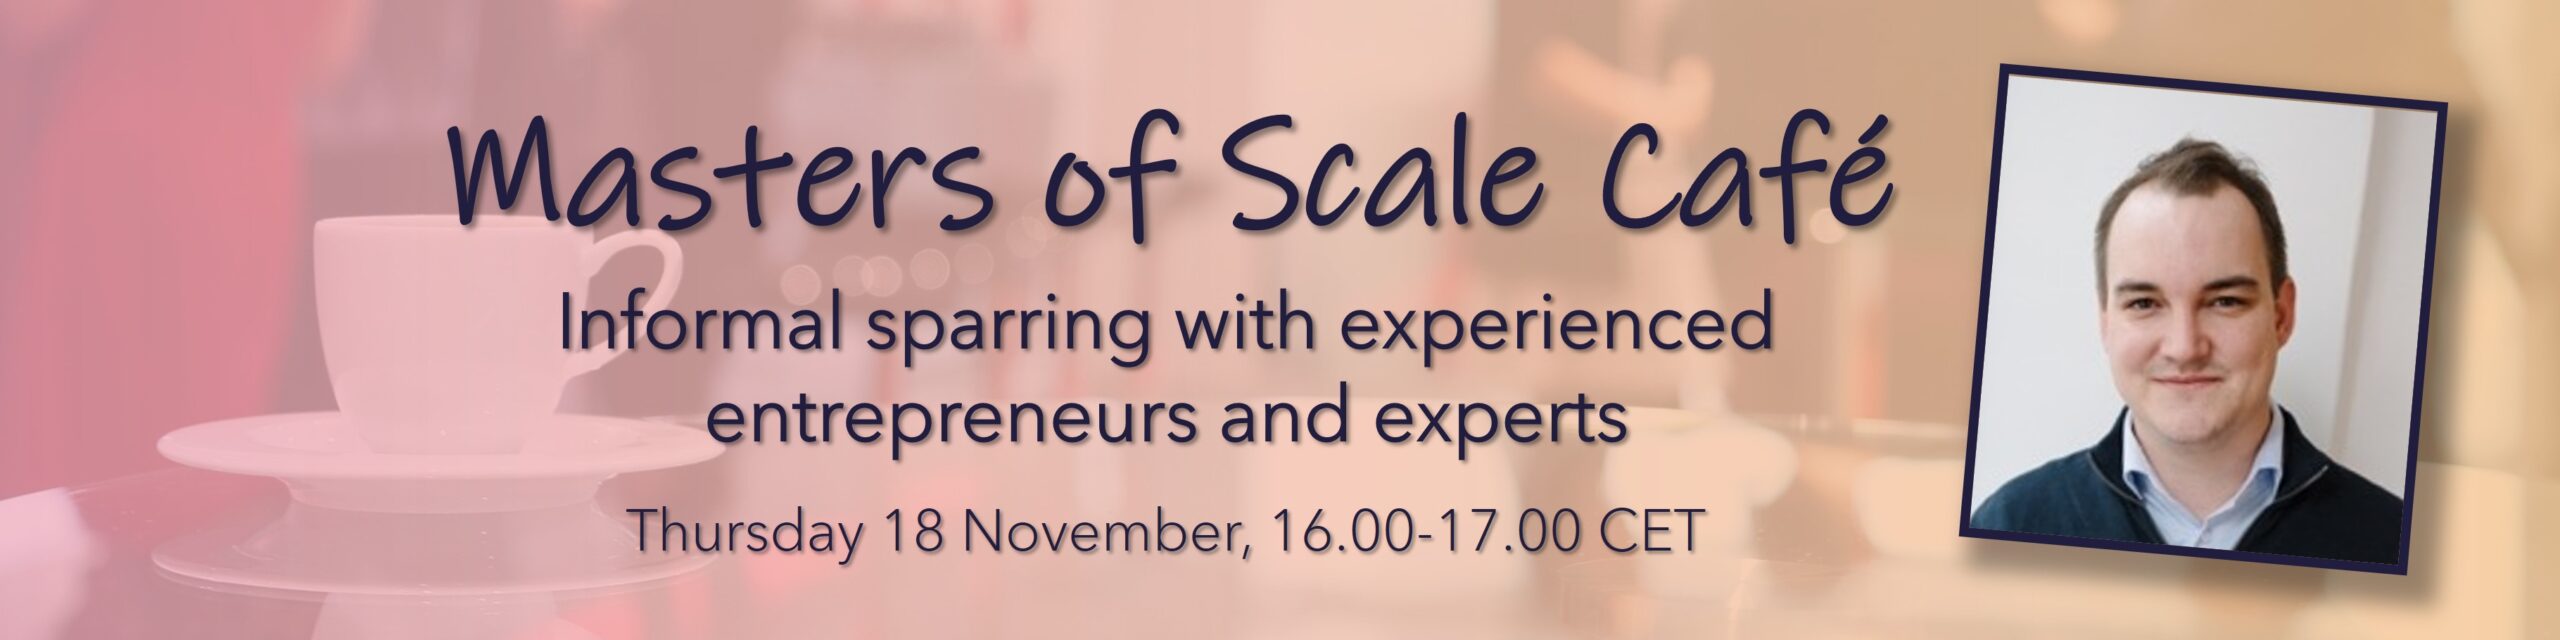 Masters of Scale Café with Kolja Heskamp, torq.partners